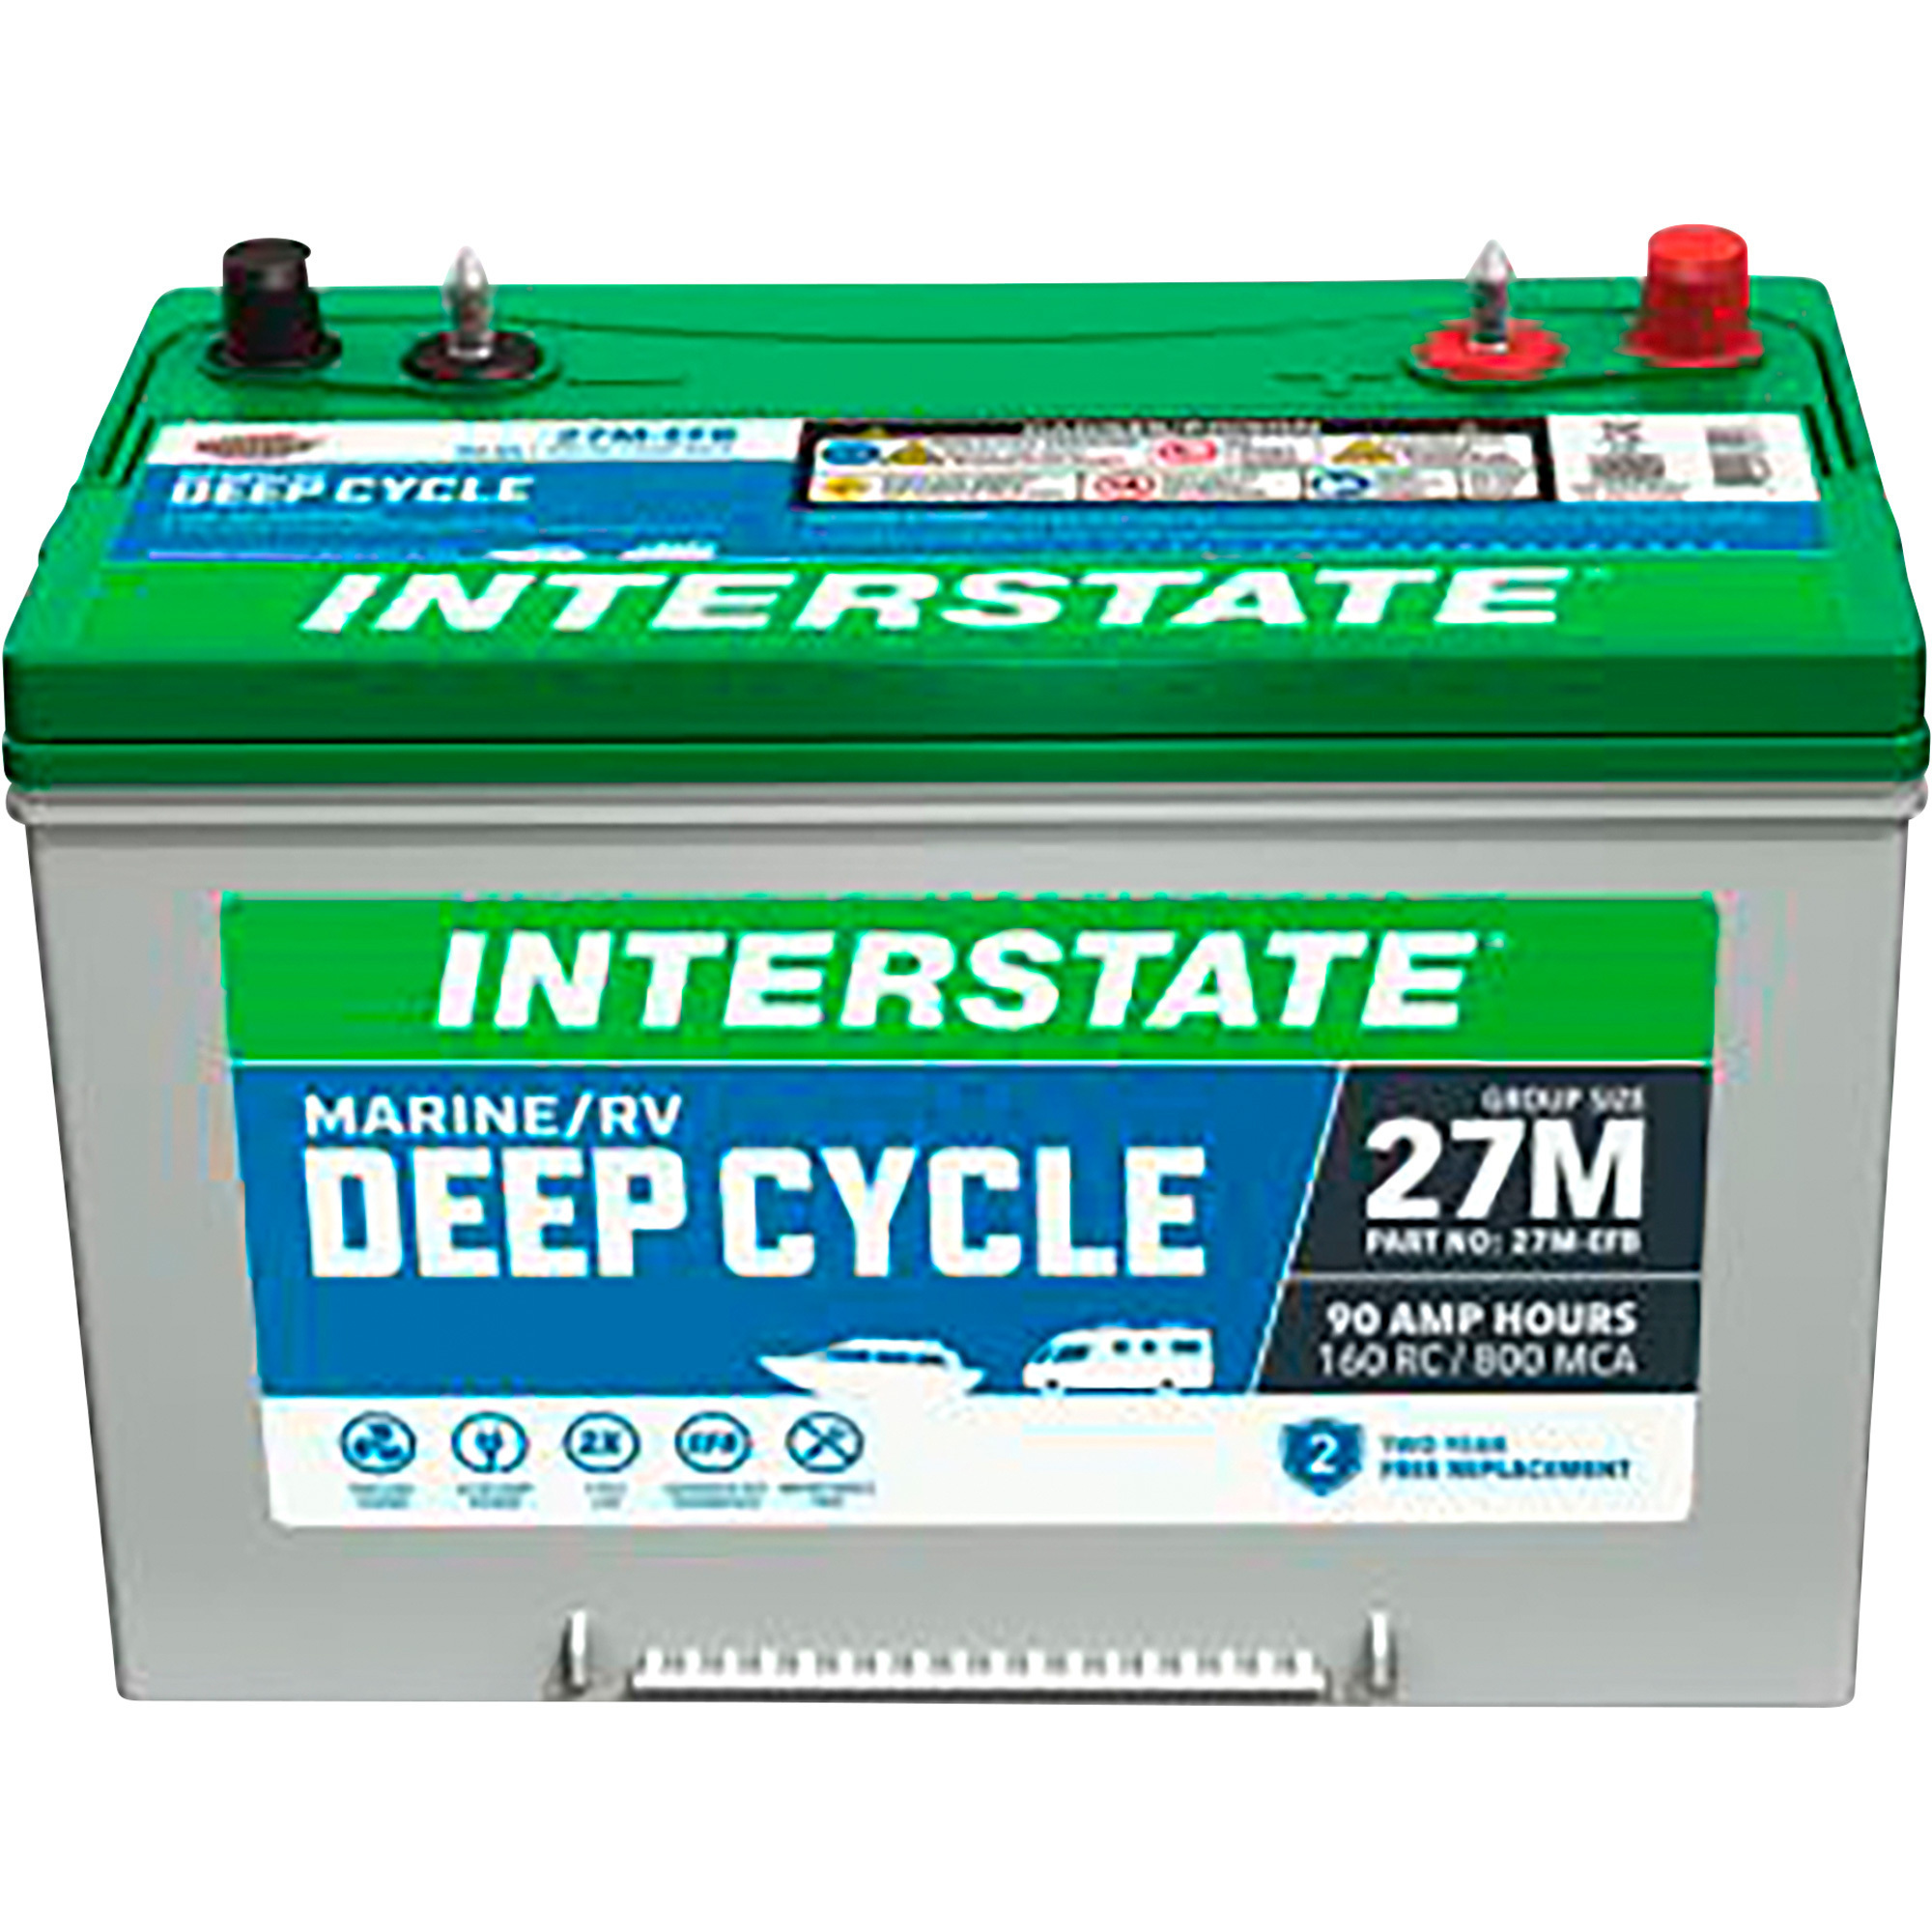 Interstate Marine/RV Deep Cycle Battery â Group Size 27M, 12 Volt, 90Ah, Sealed Lead Acid, Model 27M-EFB